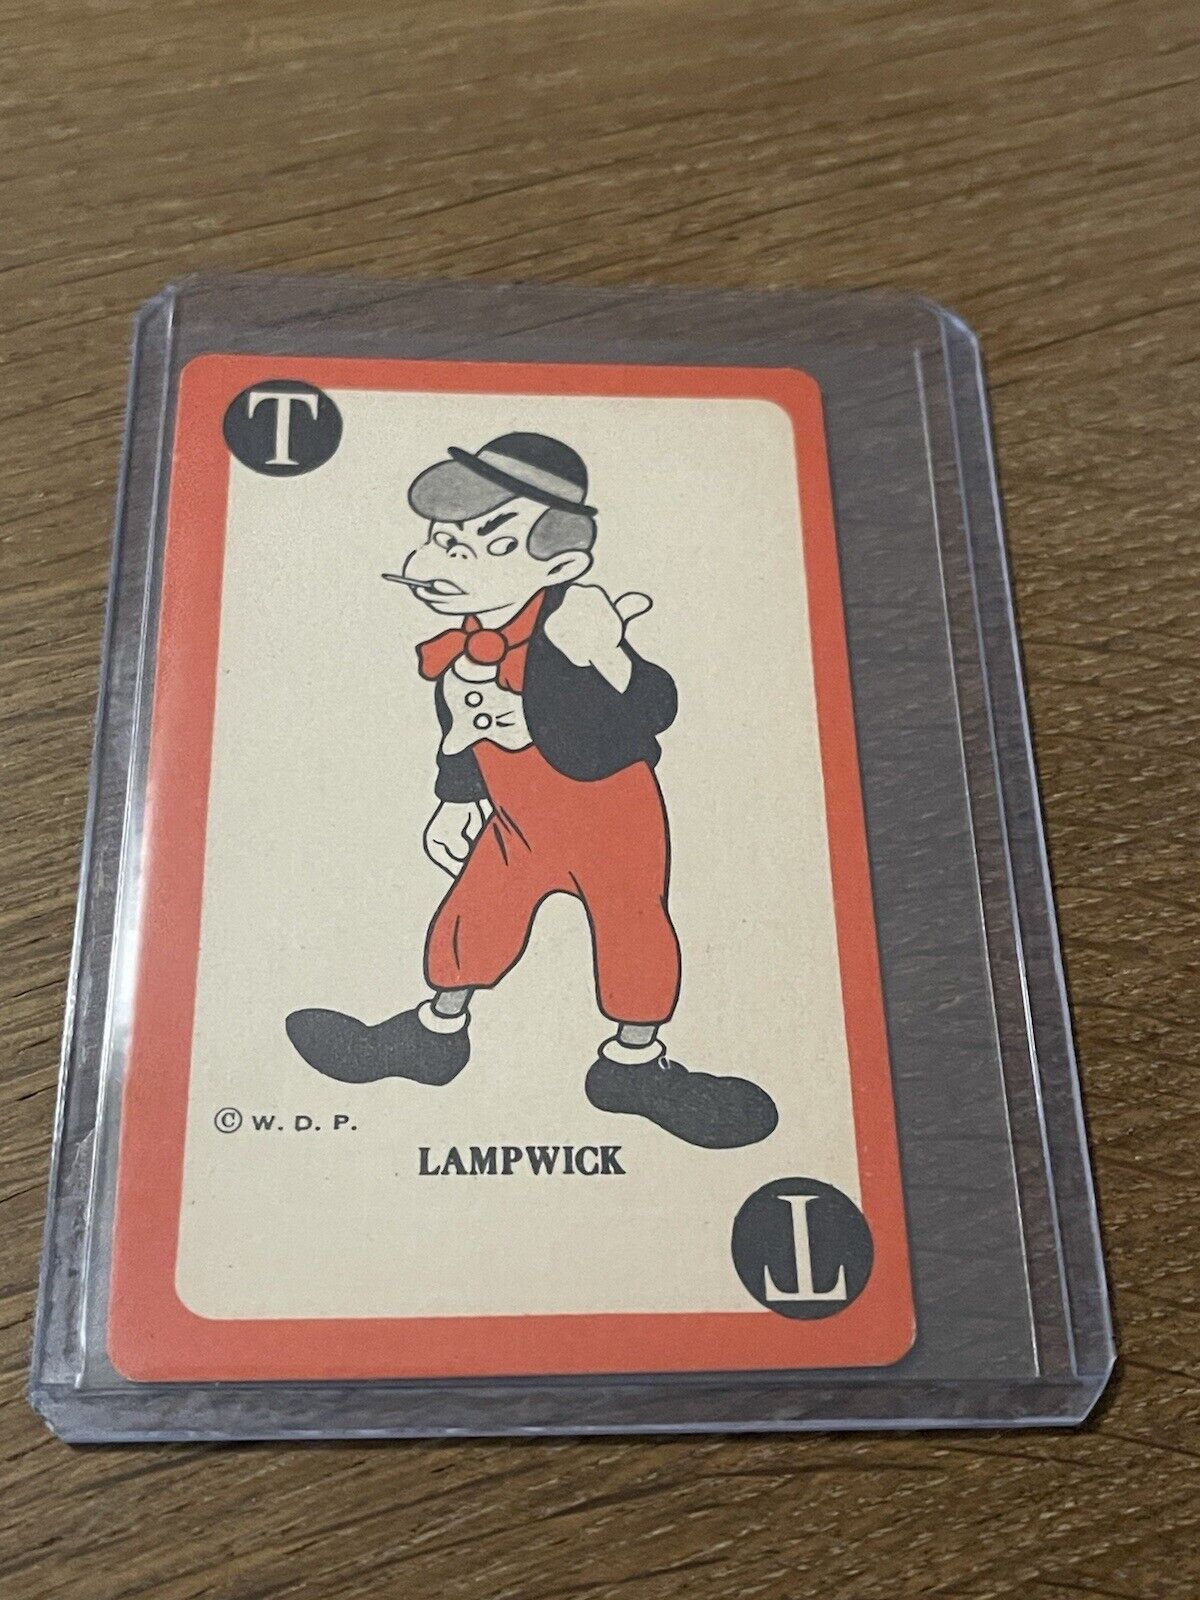 1939 WALT DISNEY PINOCCHIO “LAMPWICK” ROOKIE CARD WHITMAN DISNEYANA